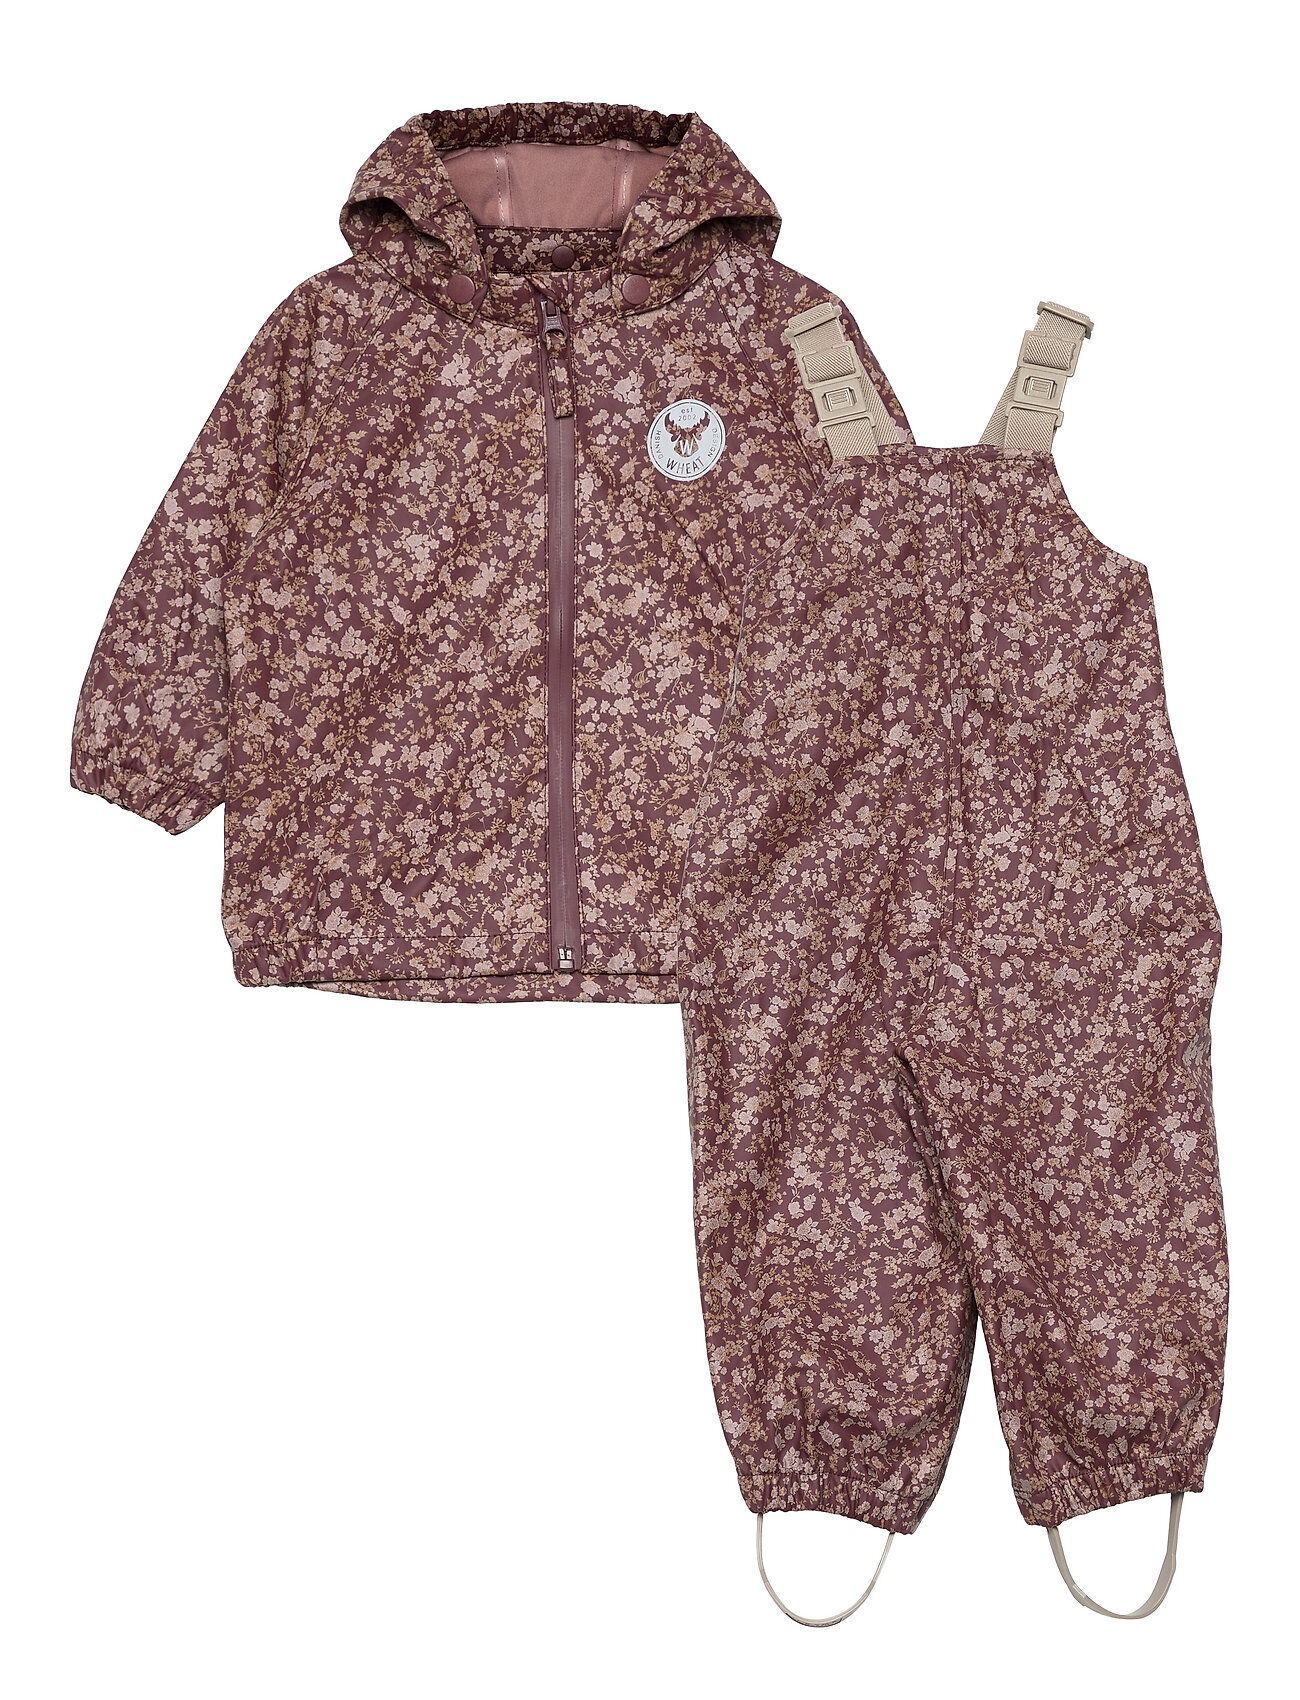 Wheat Rainwear Charlie Outerwear Coveralls Rainwear Sets & Coveralls Rosa Wheat